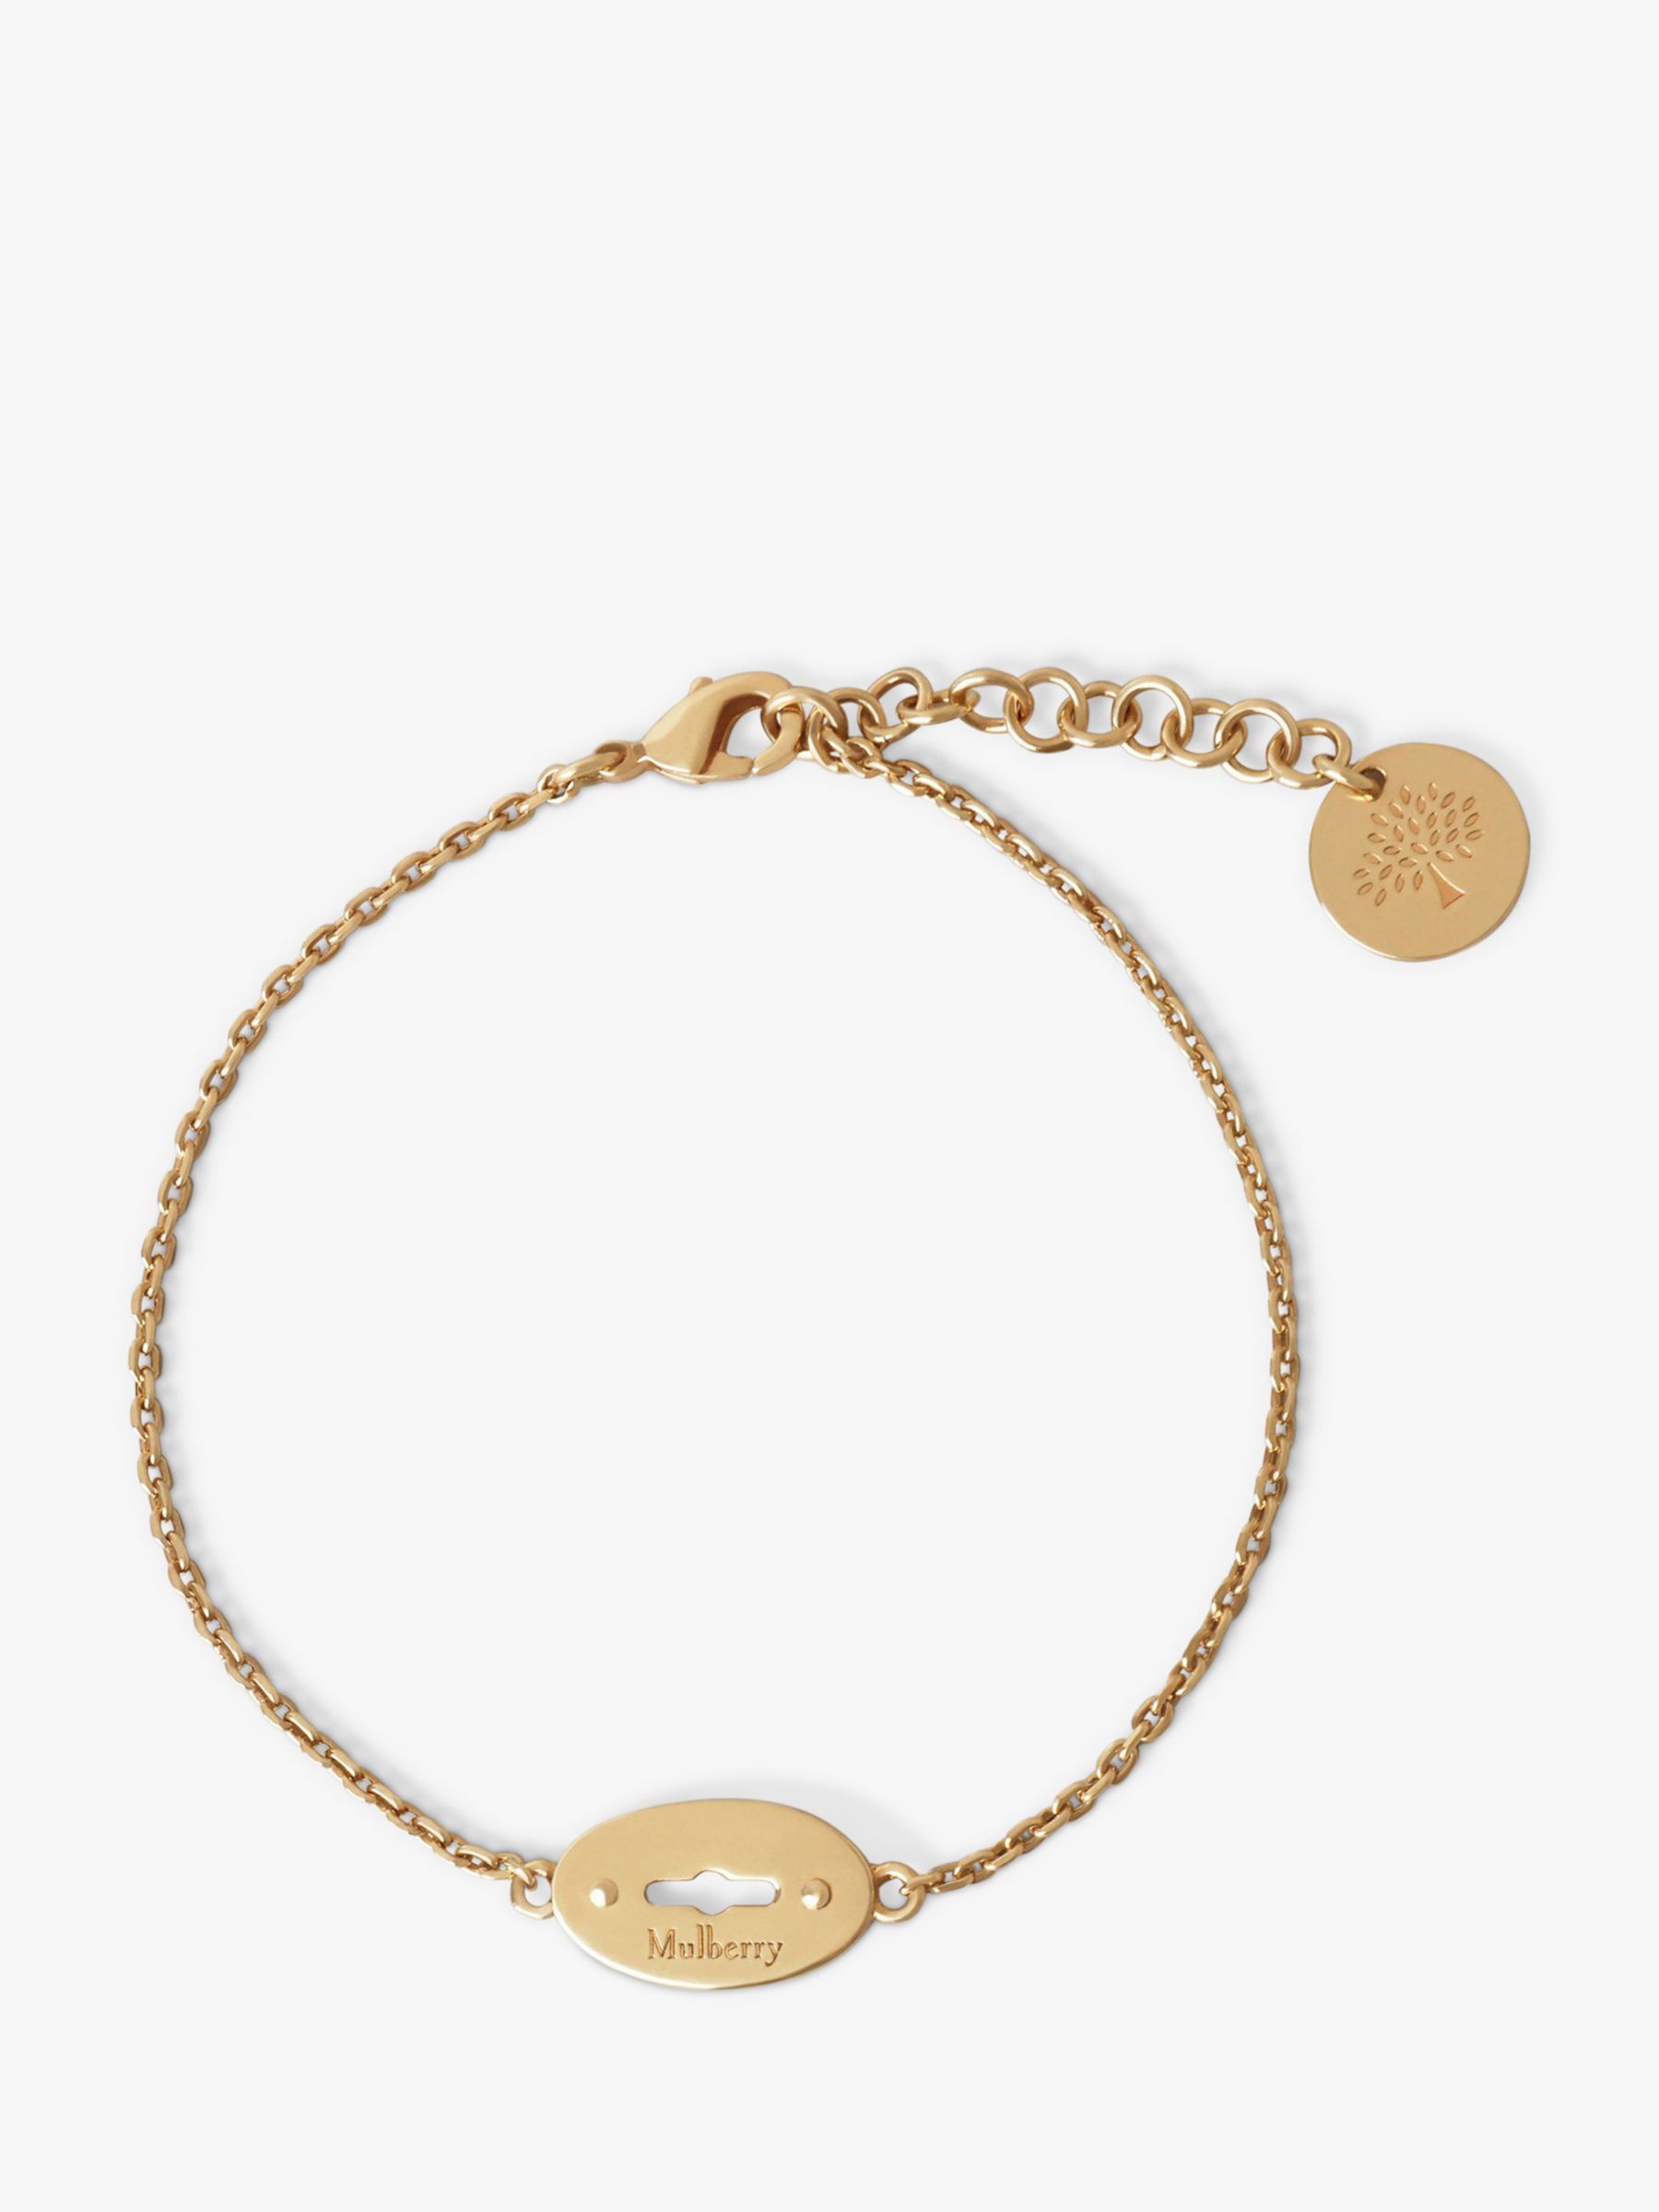 Mulberry Bayswater Postman's Lock Bracelet, Gold, Medium